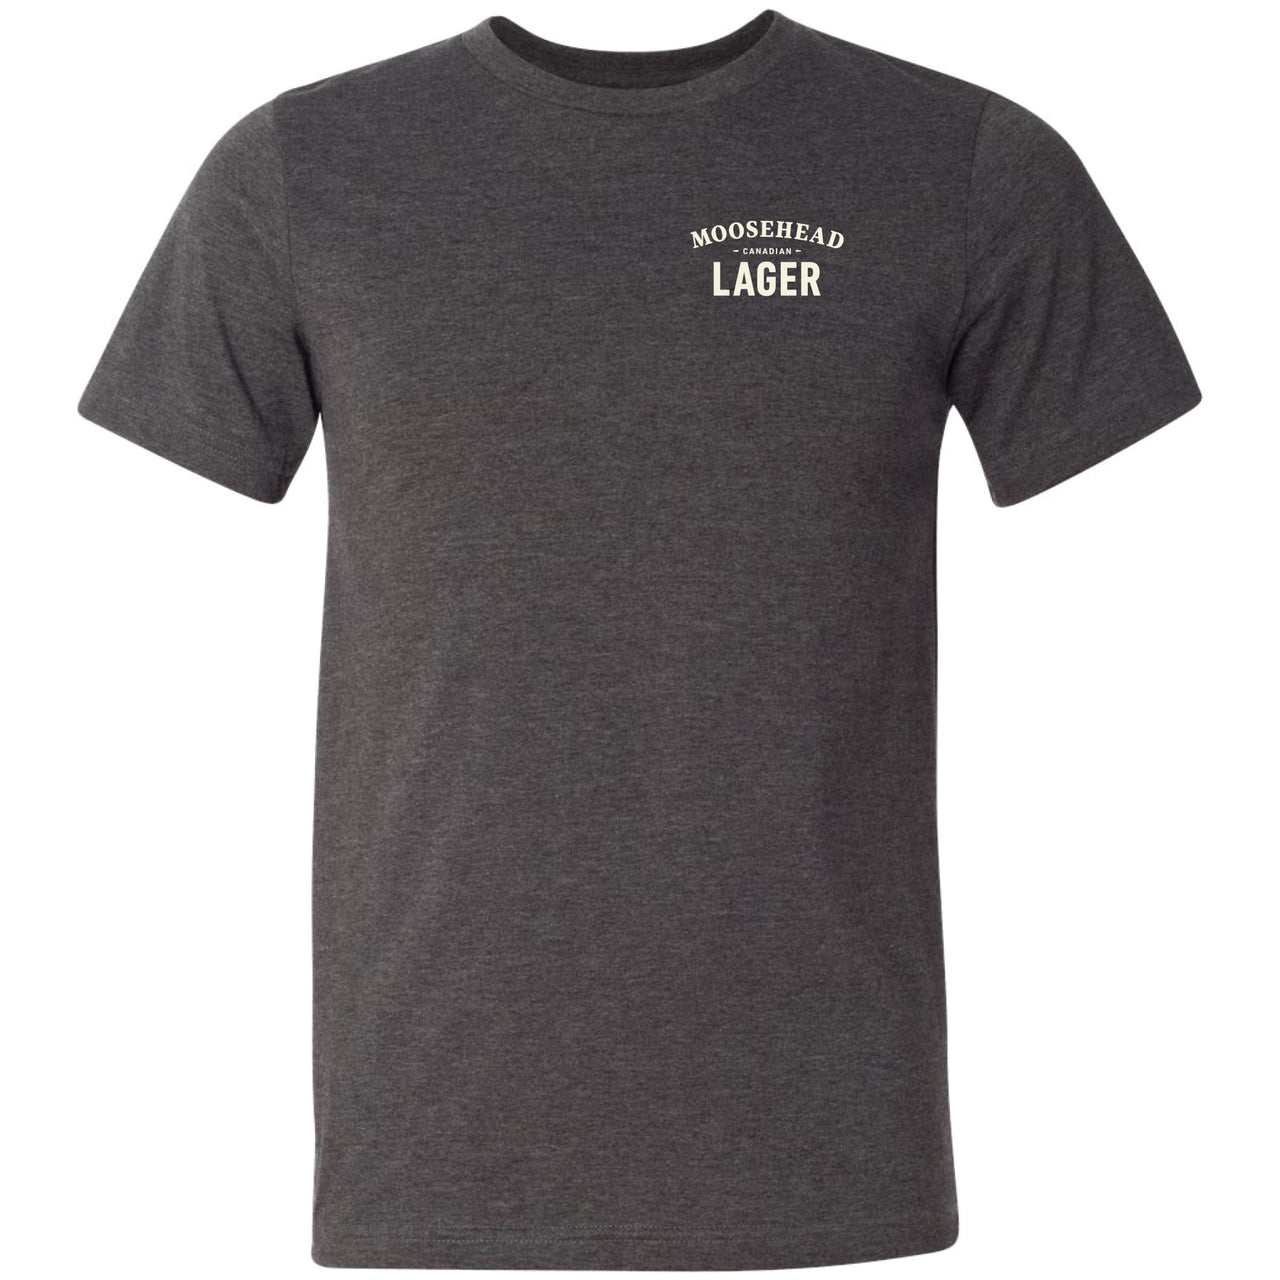 Moosehead Lager - Logo 2-sided T-shirt